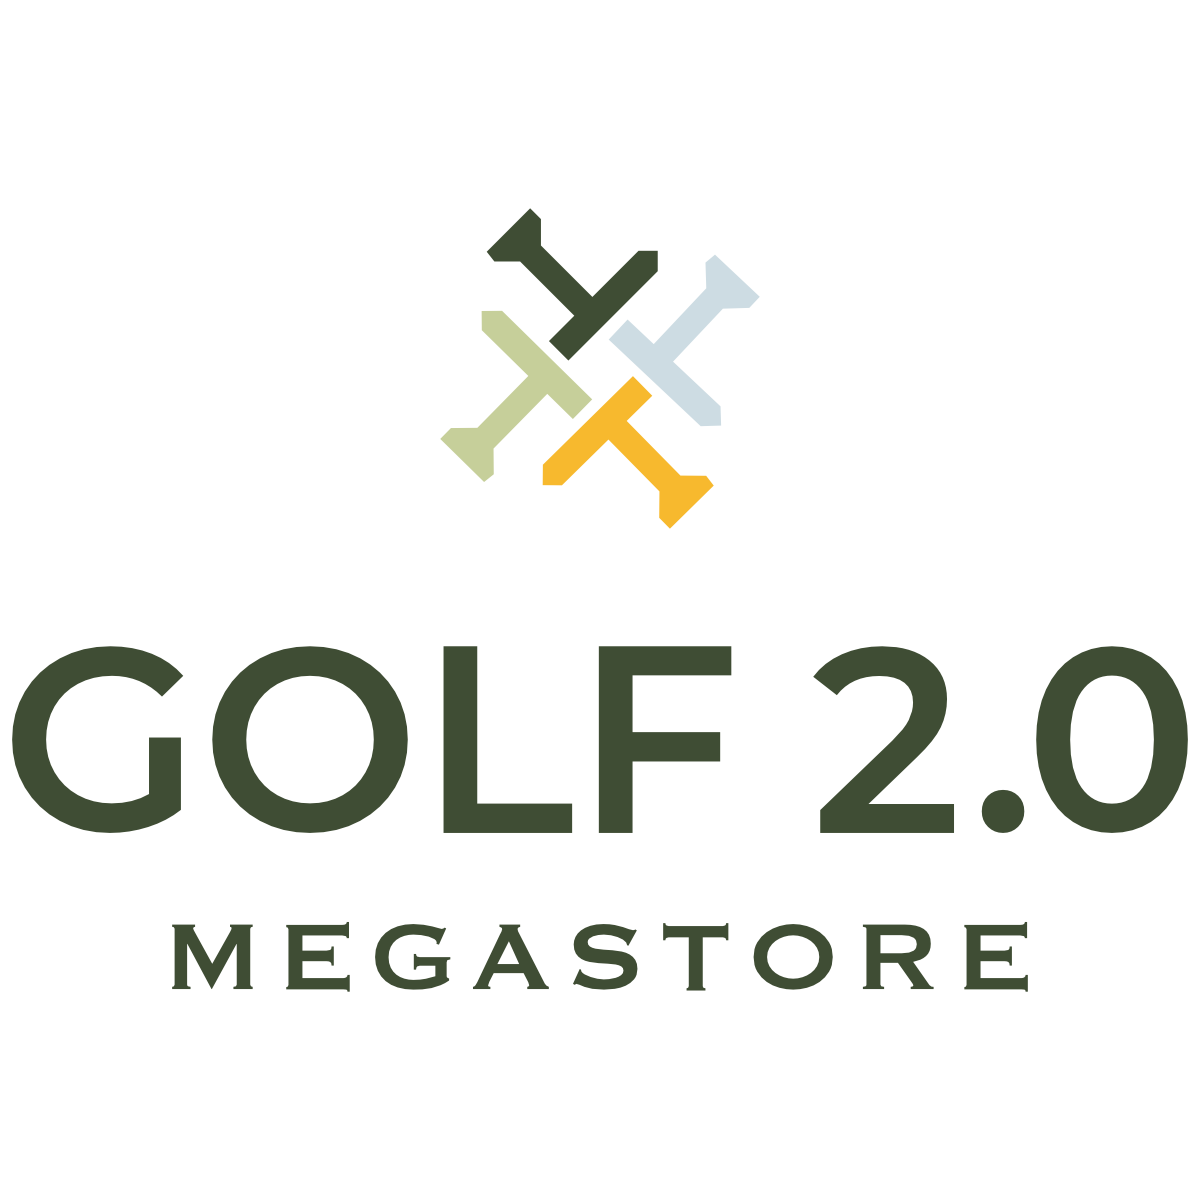 Golf 2.0 Megastore